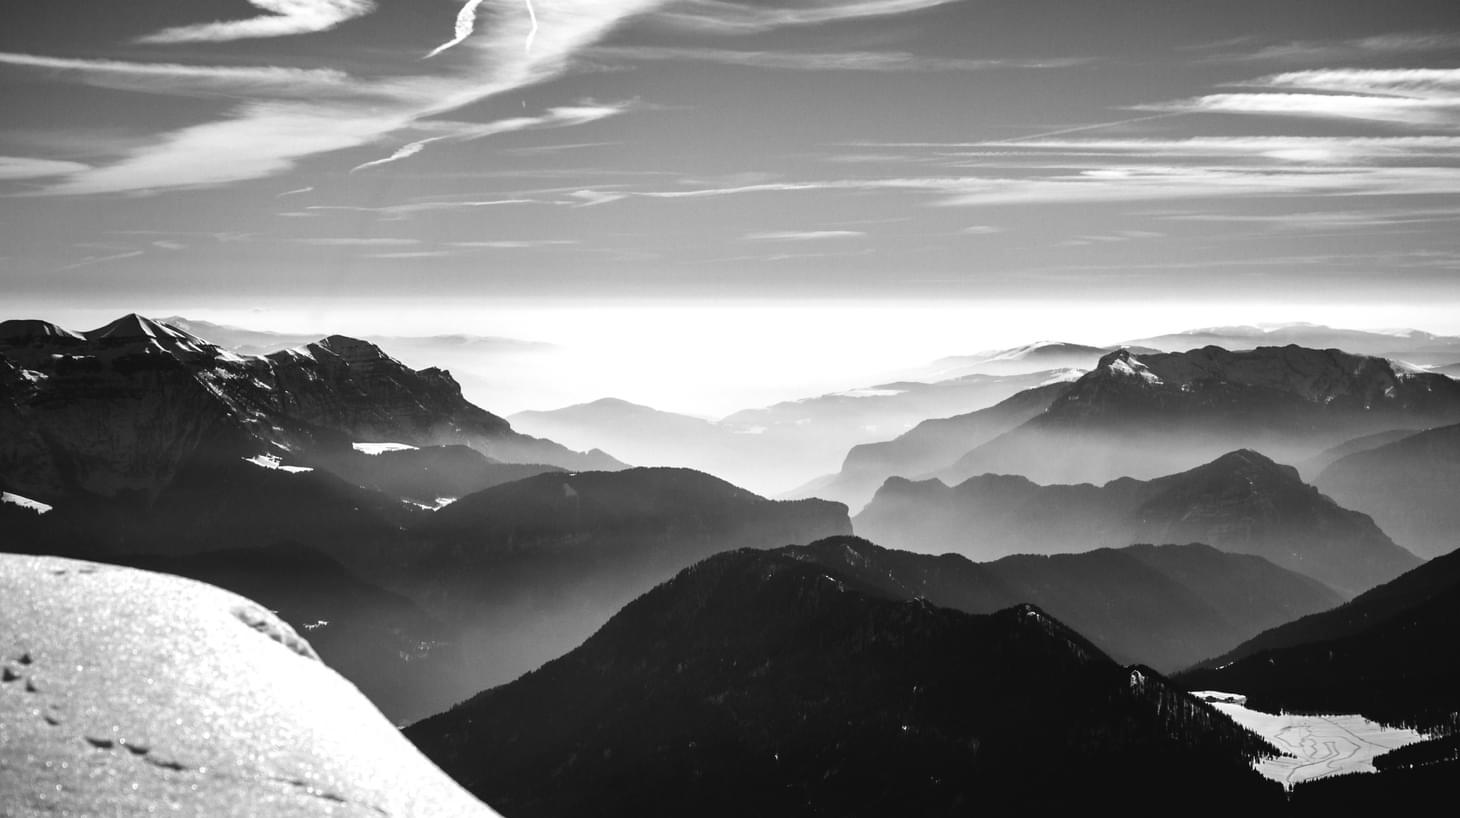 A beautiful black and white photo of a mountain vista